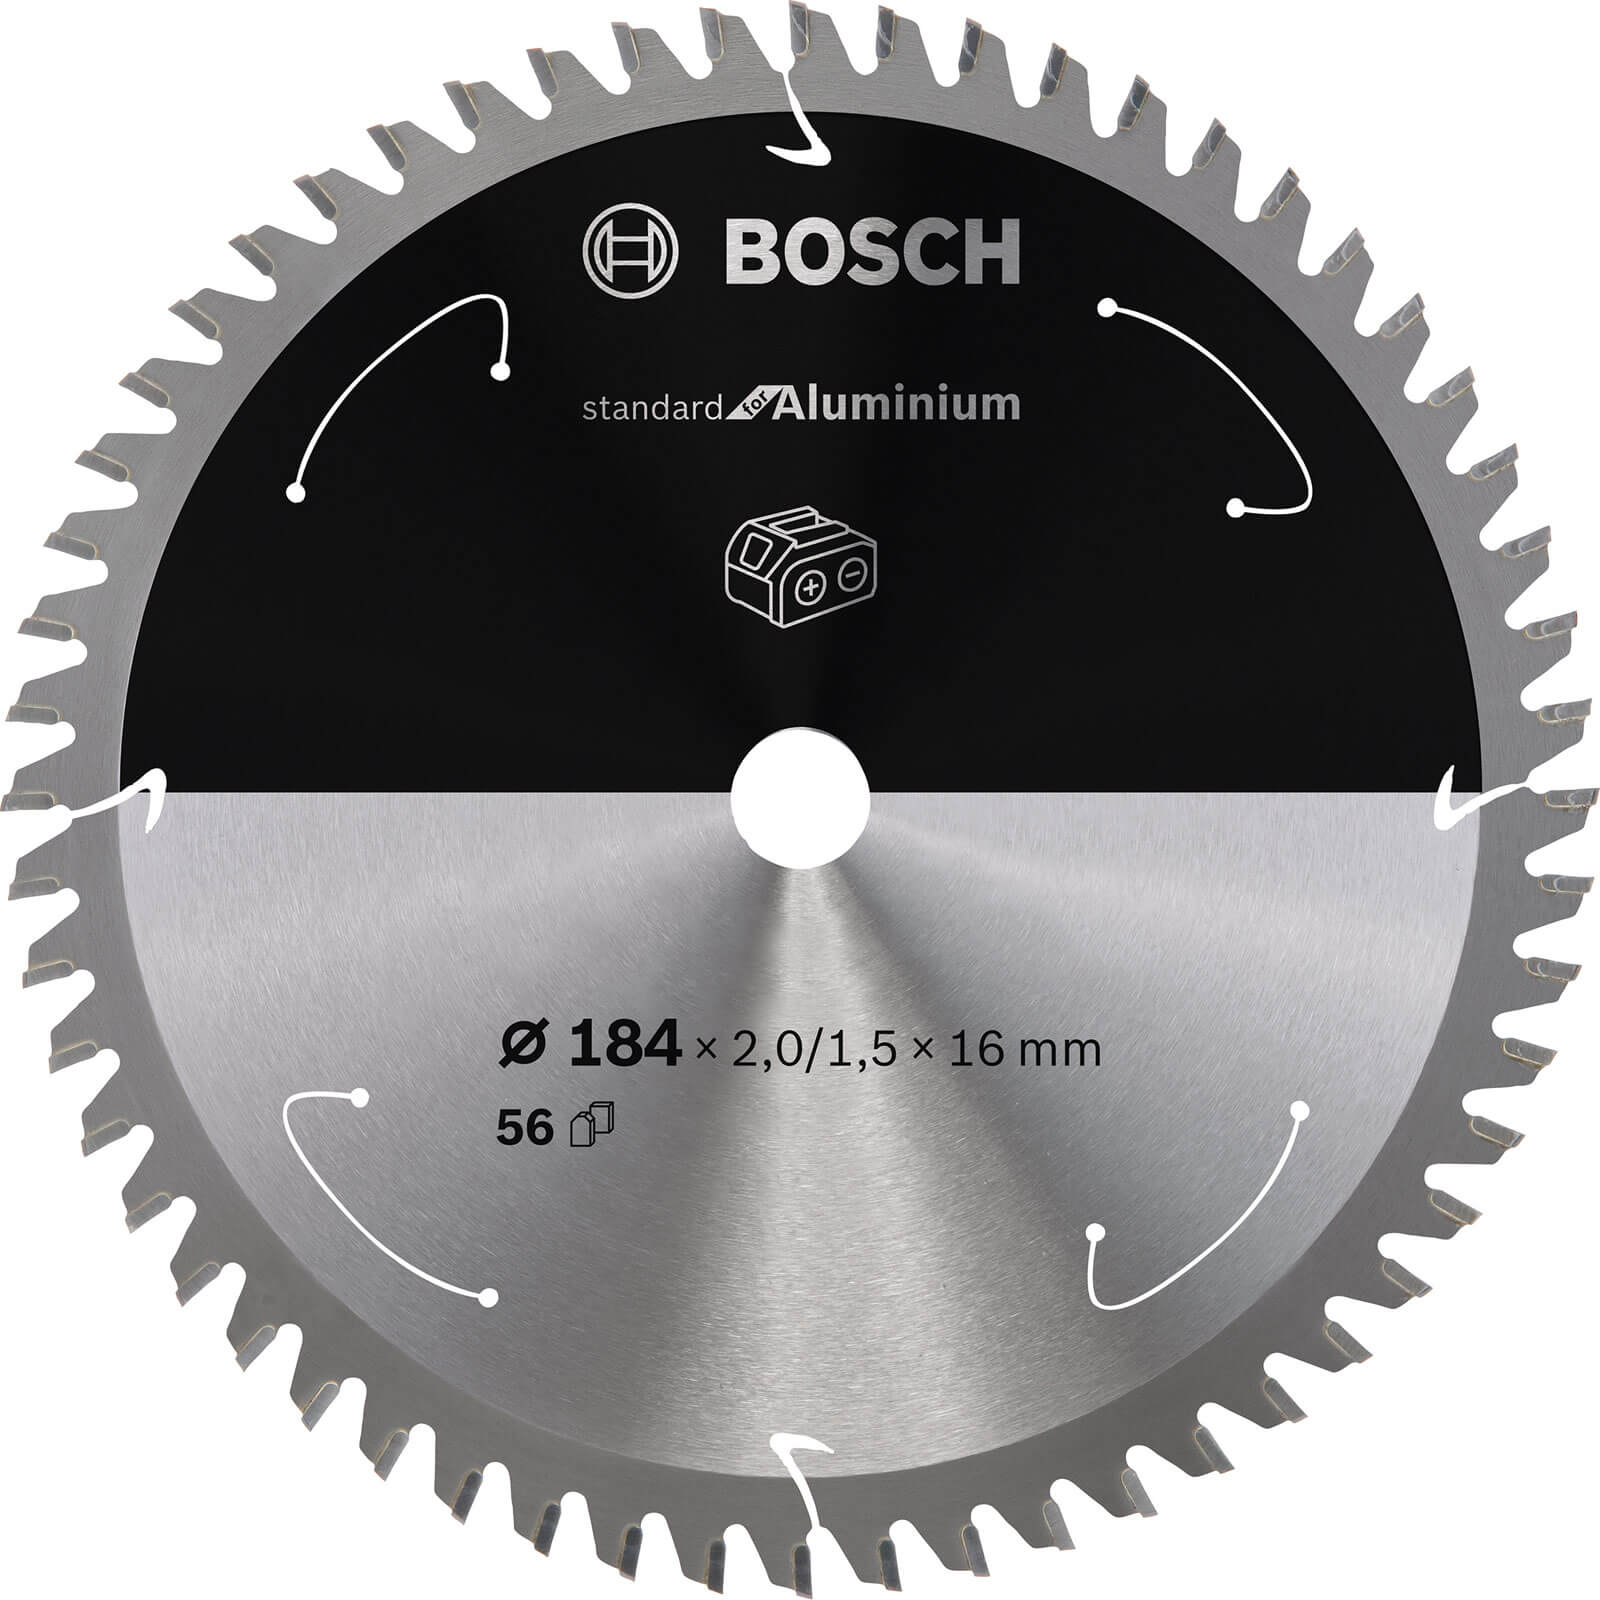 Bosch Cordless Circular Saw Blade for Aluminium 184mm 56T 16mm